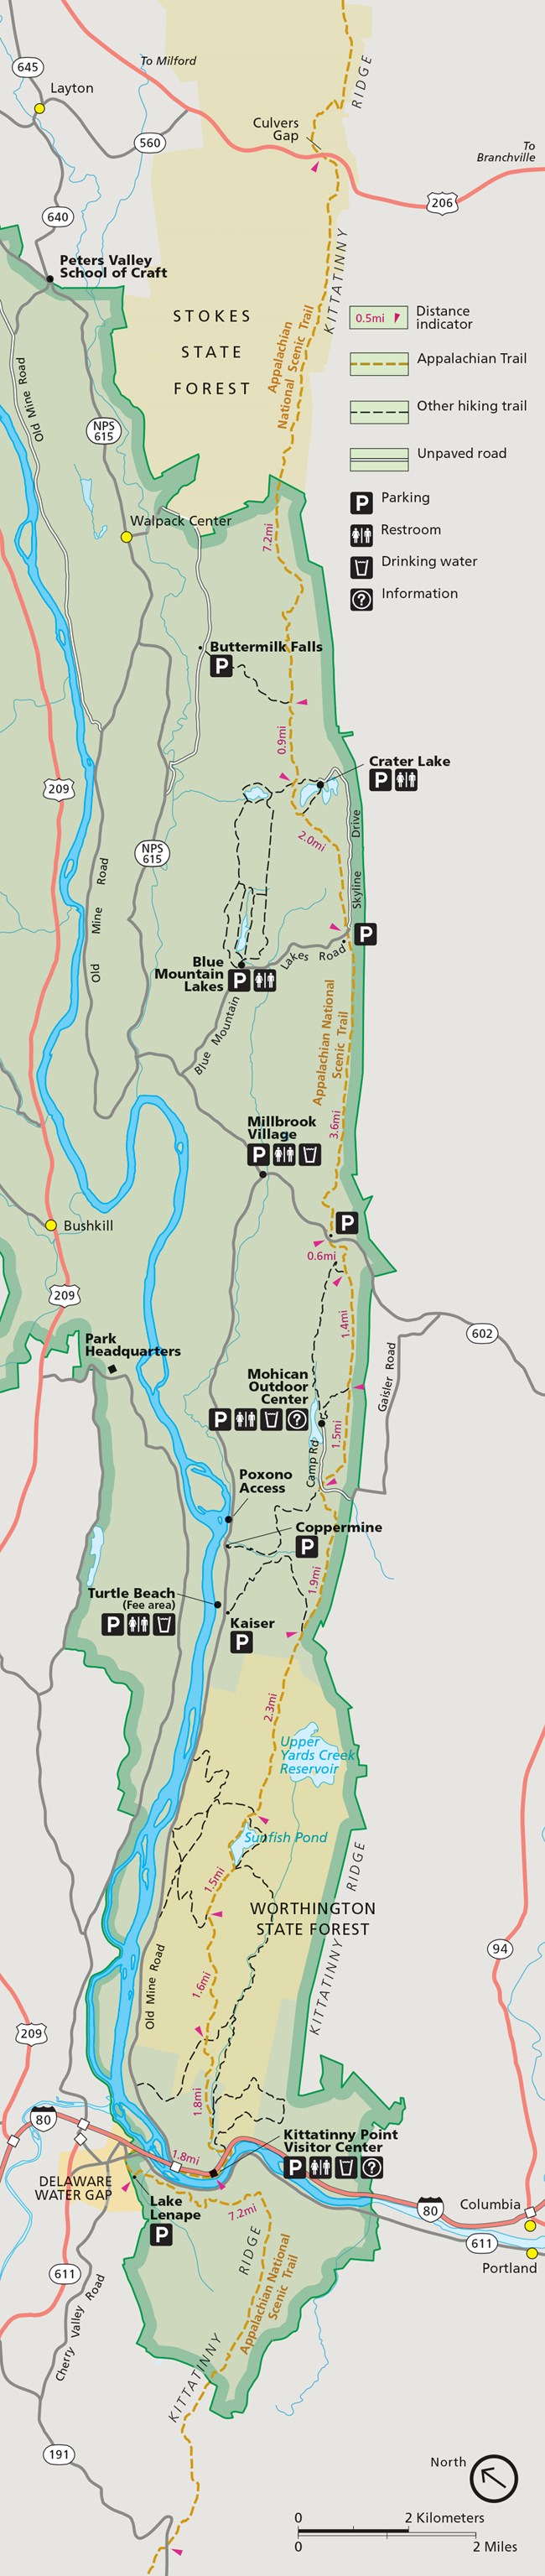 map of appalachian trail in DEWA